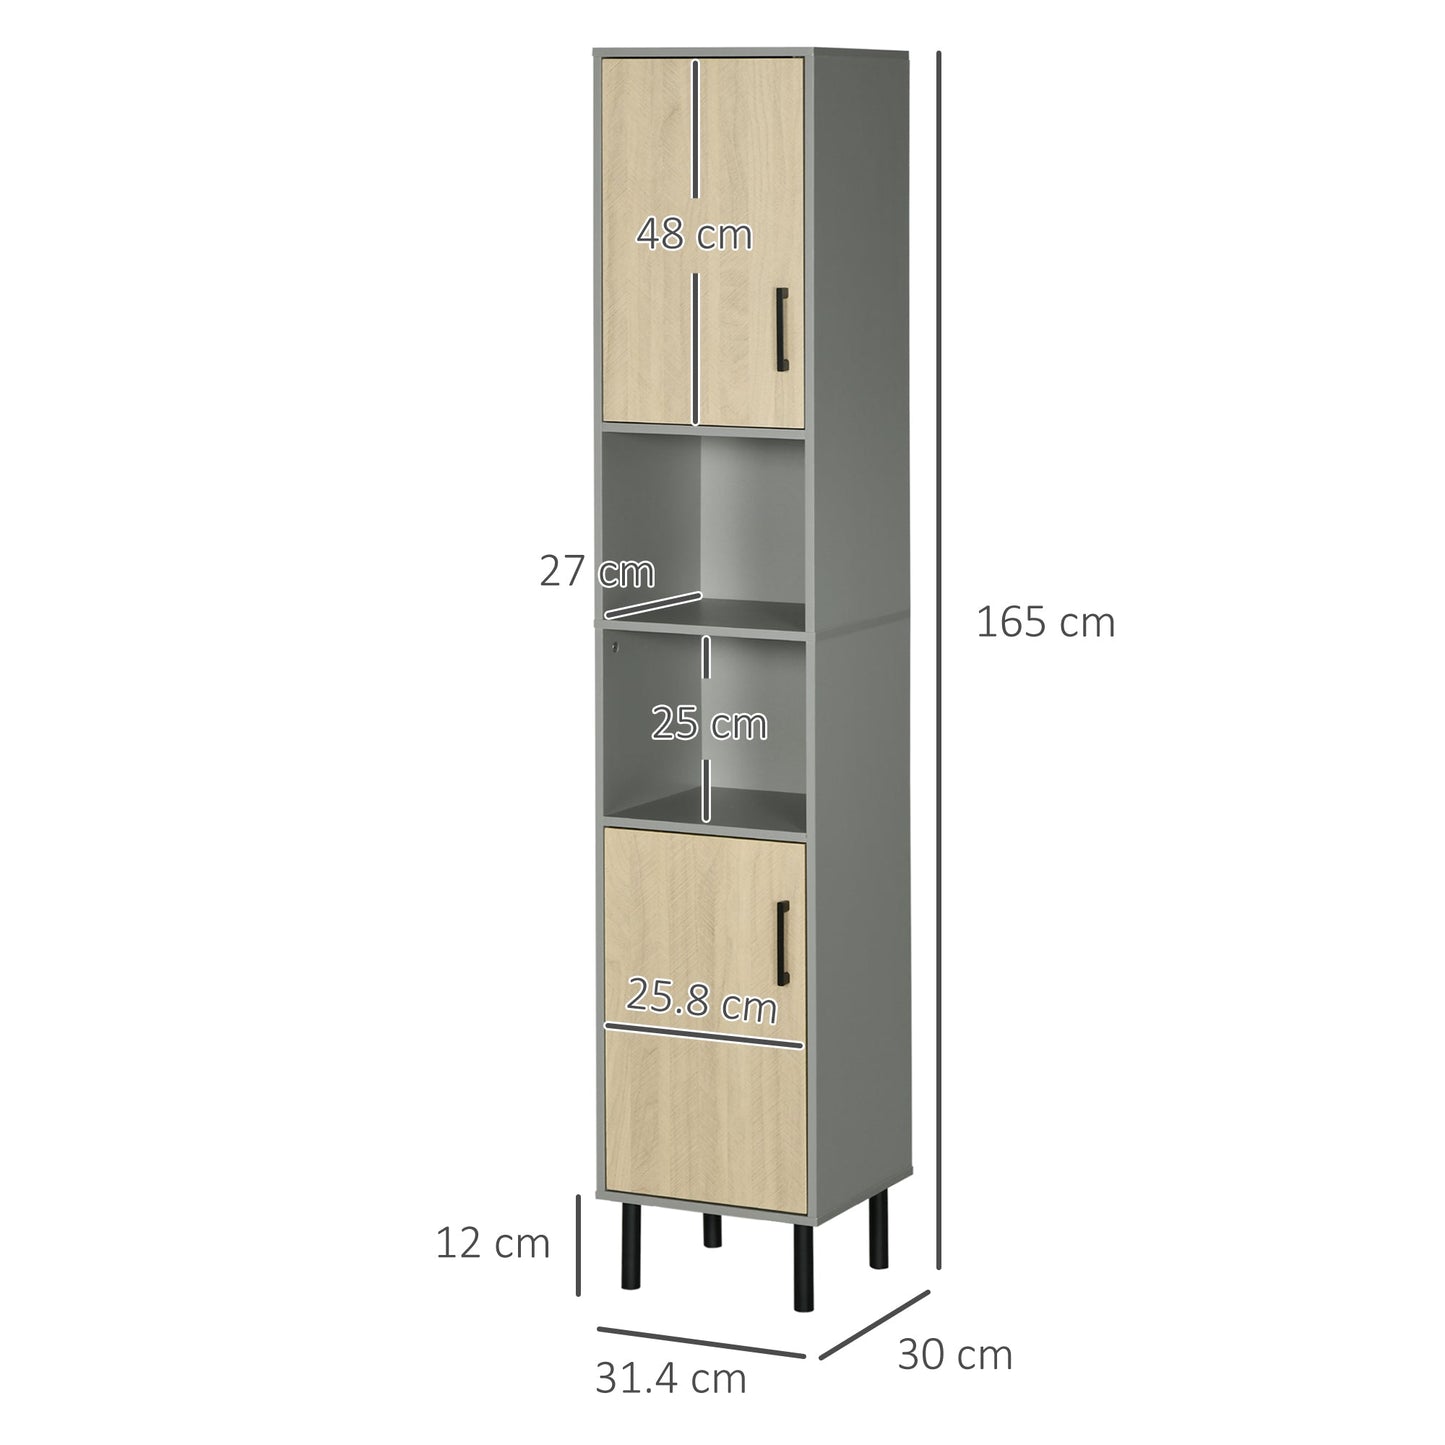 kleankin Freestanding Bathroom Storage, Tall Bathroom Cabinet with Door and Adjustable Shelves, 31.4x30x165cm